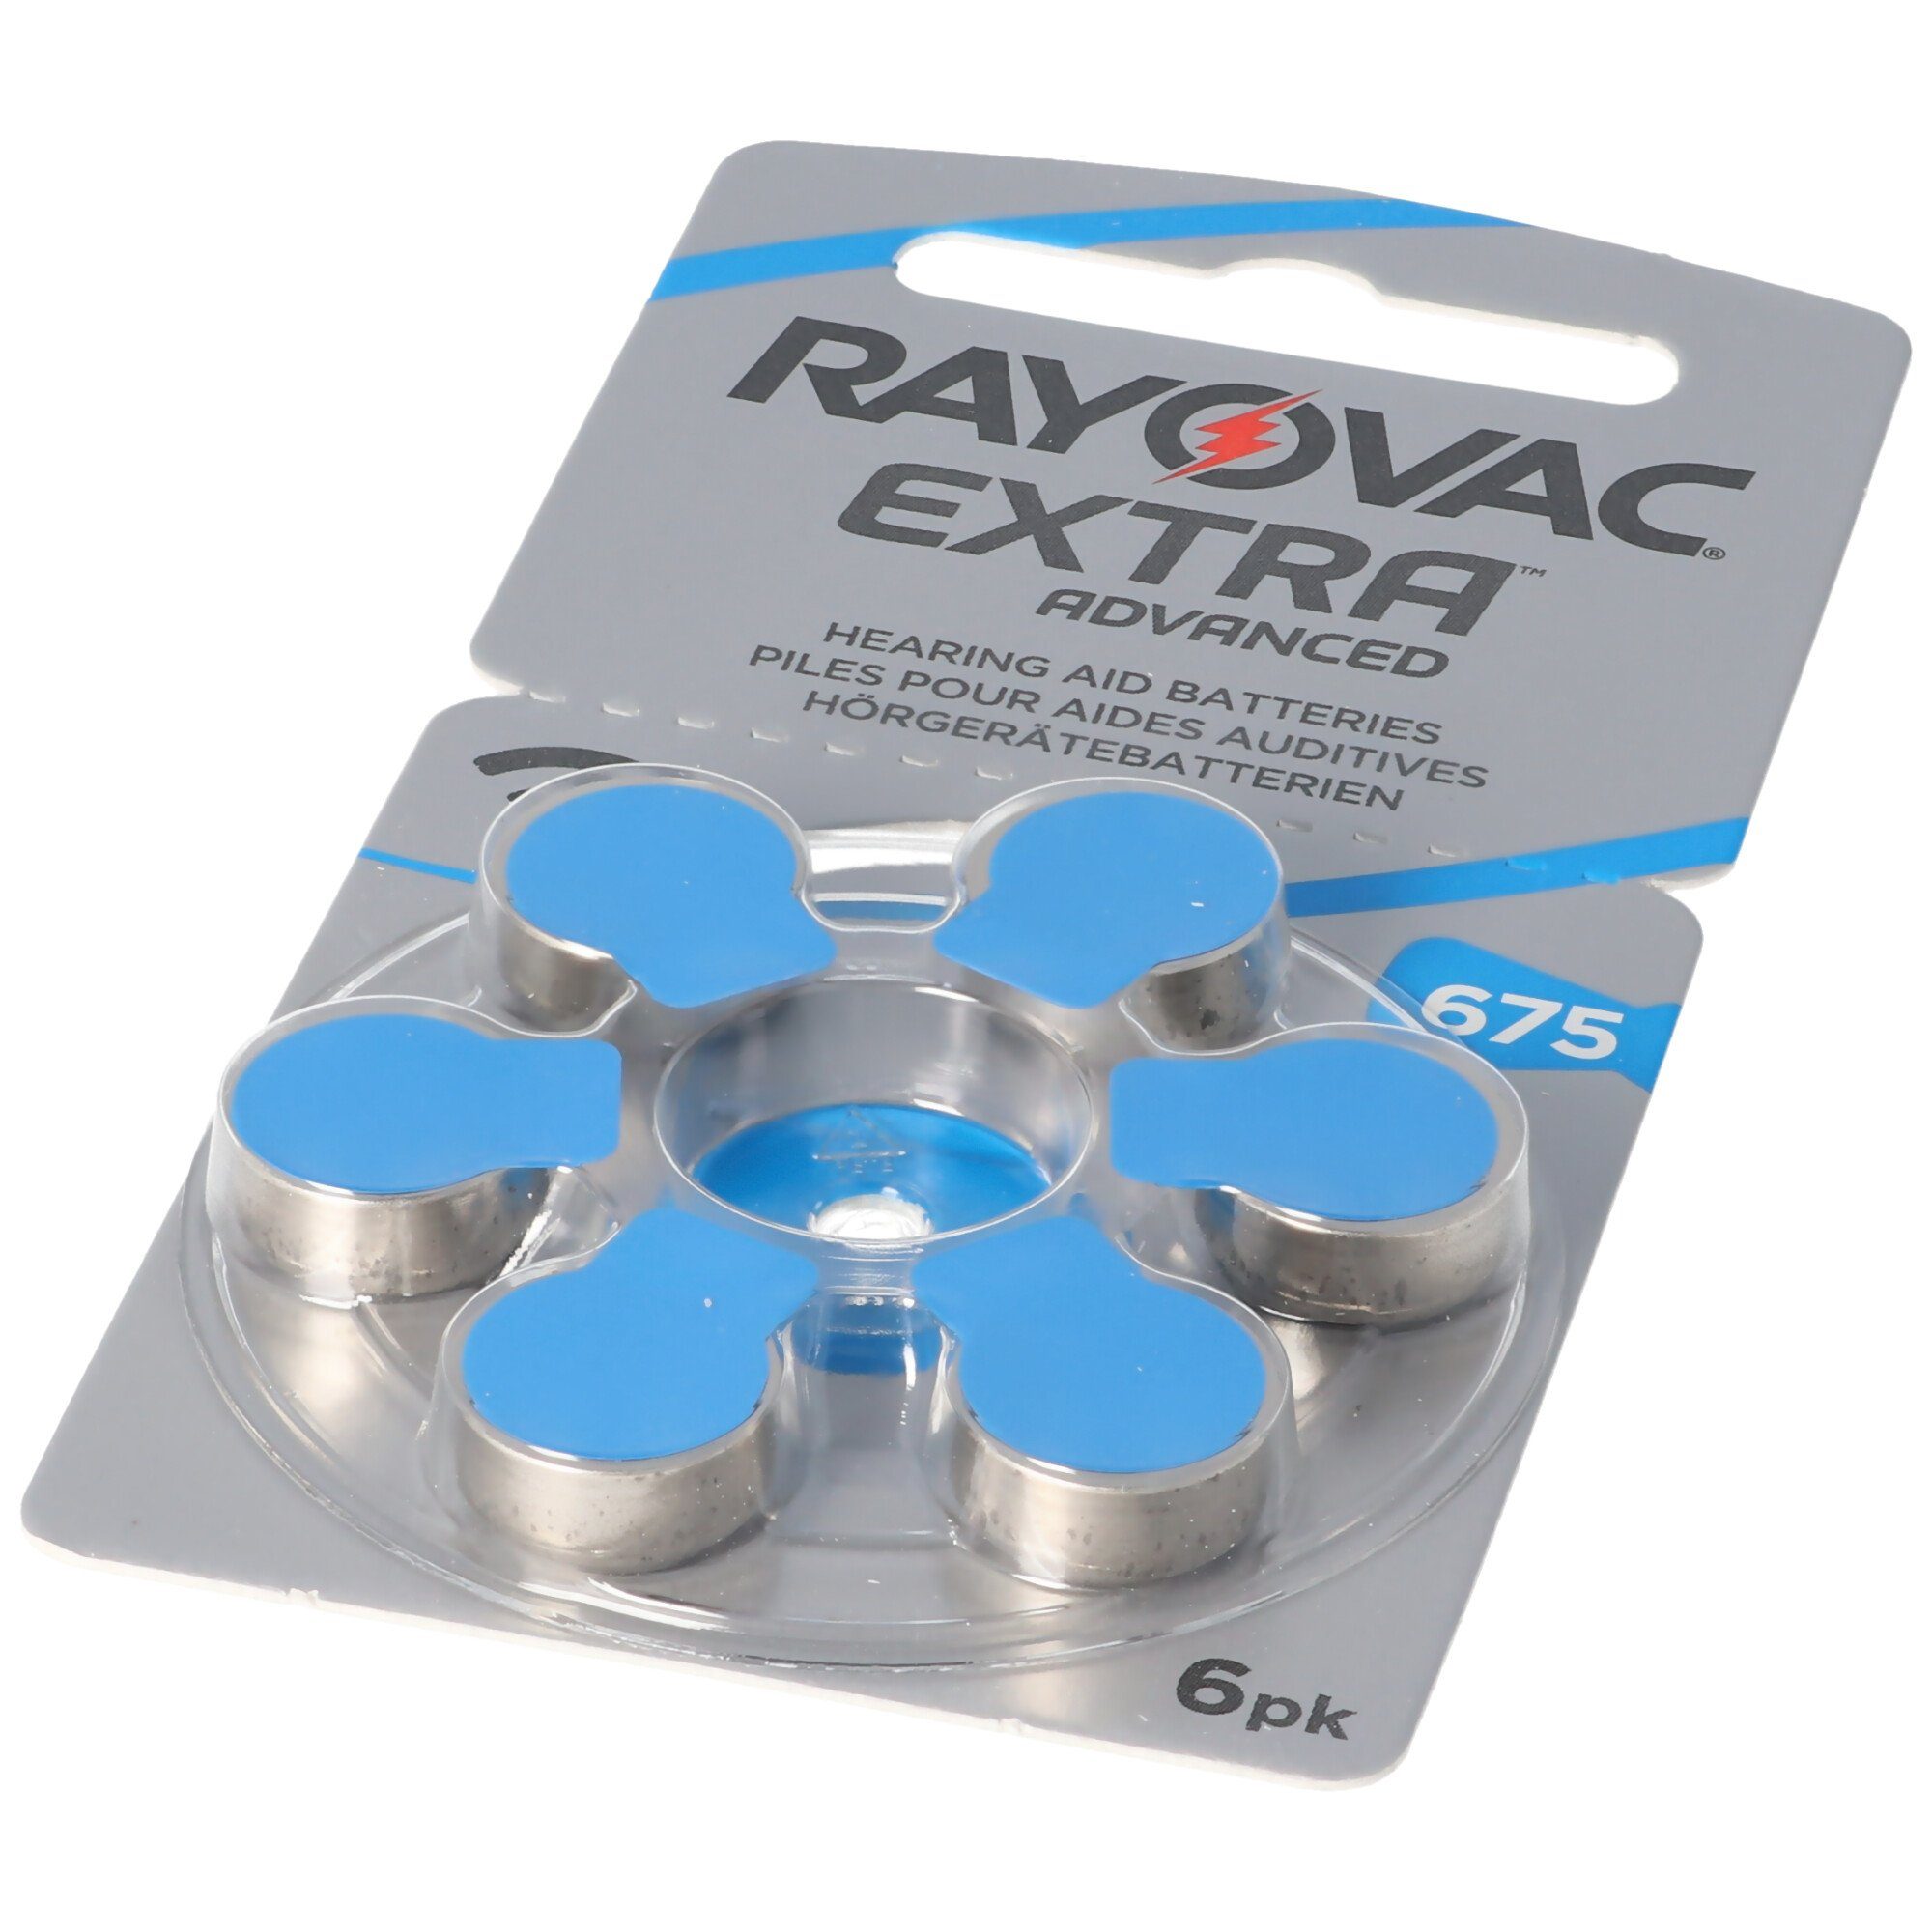 (1,4 Rayovac Extra Batterie, HA675, 4600, Hörgerätebatterie Advanced Acoustic PR44, V) RAYOVAC